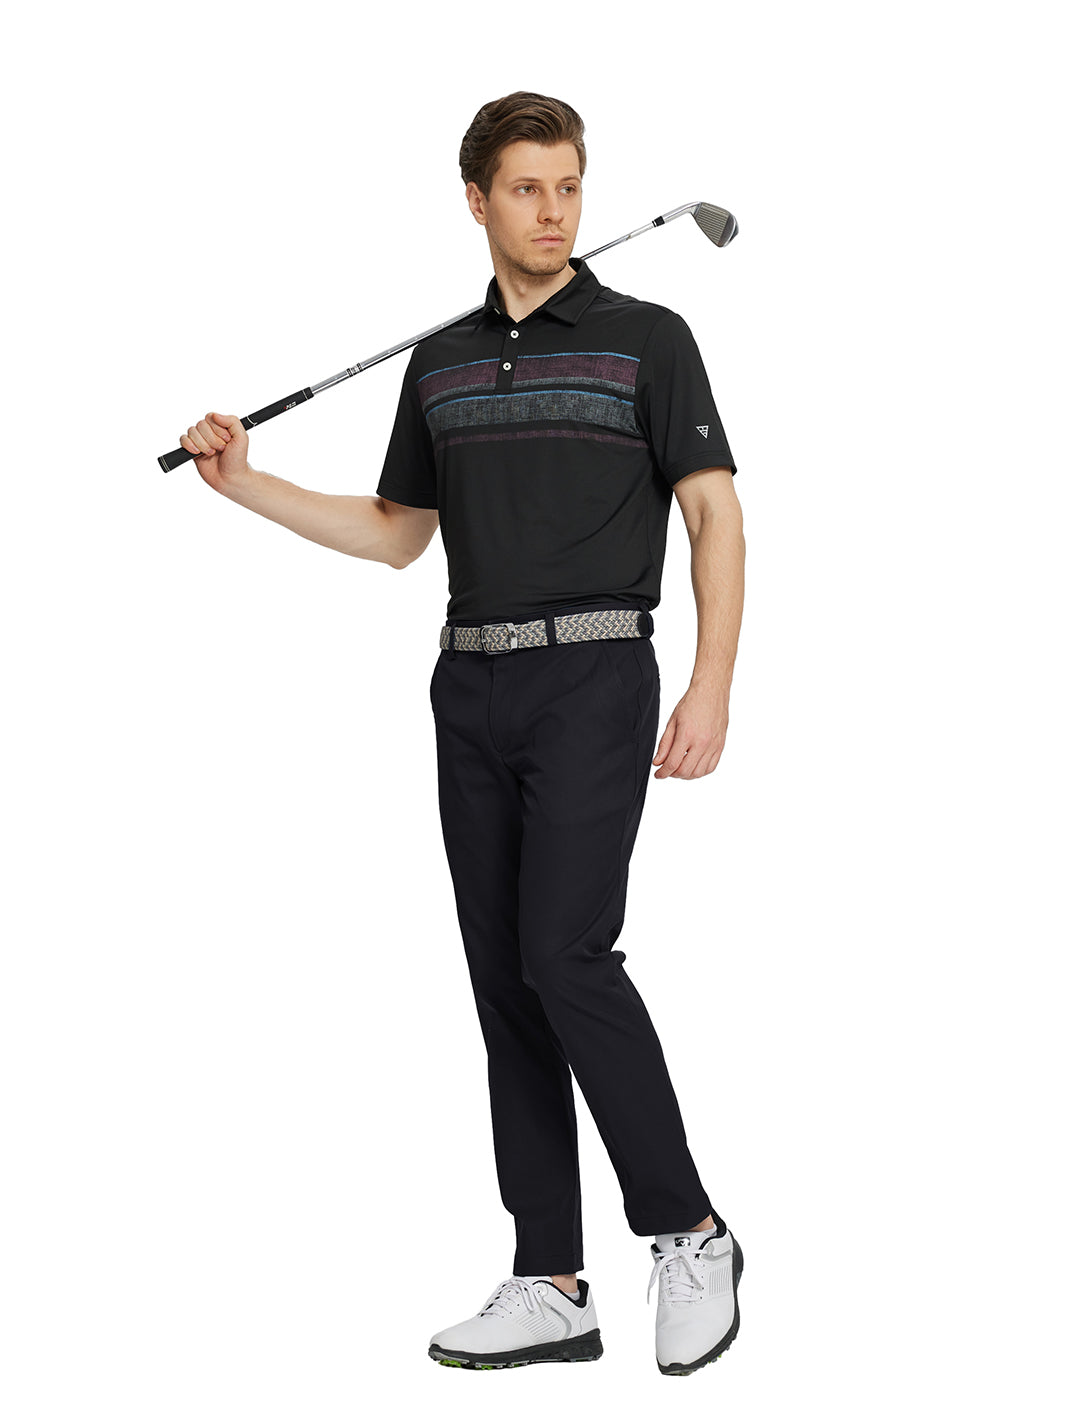 Men's Performance Golf Pants-Black